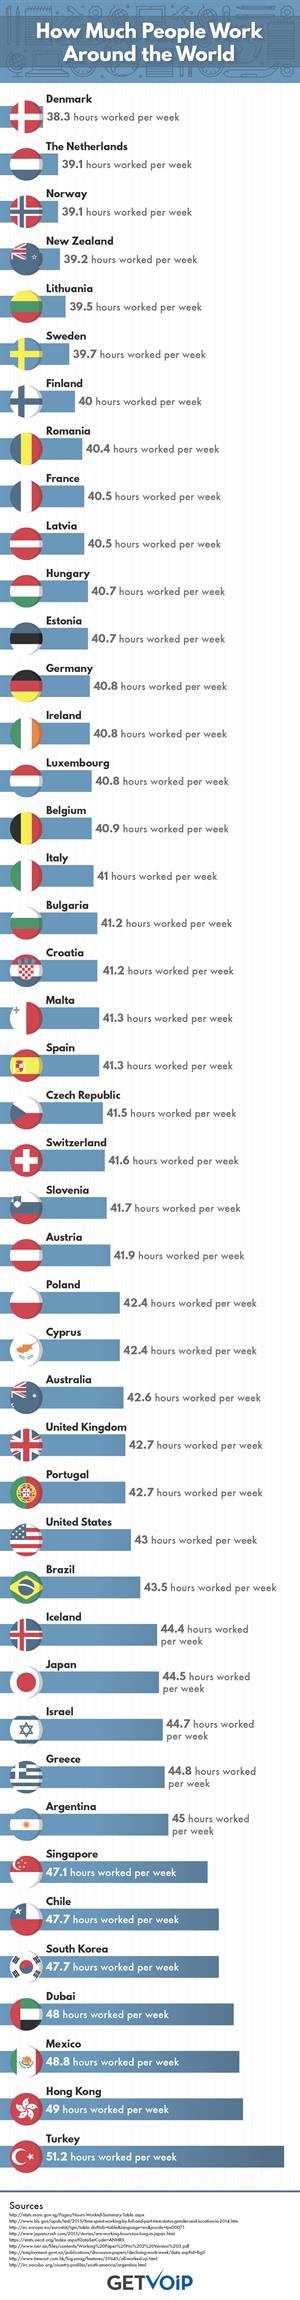 Which Countries Work The Longest Hours? Horas de Trabajo y productividad (GetVoid)